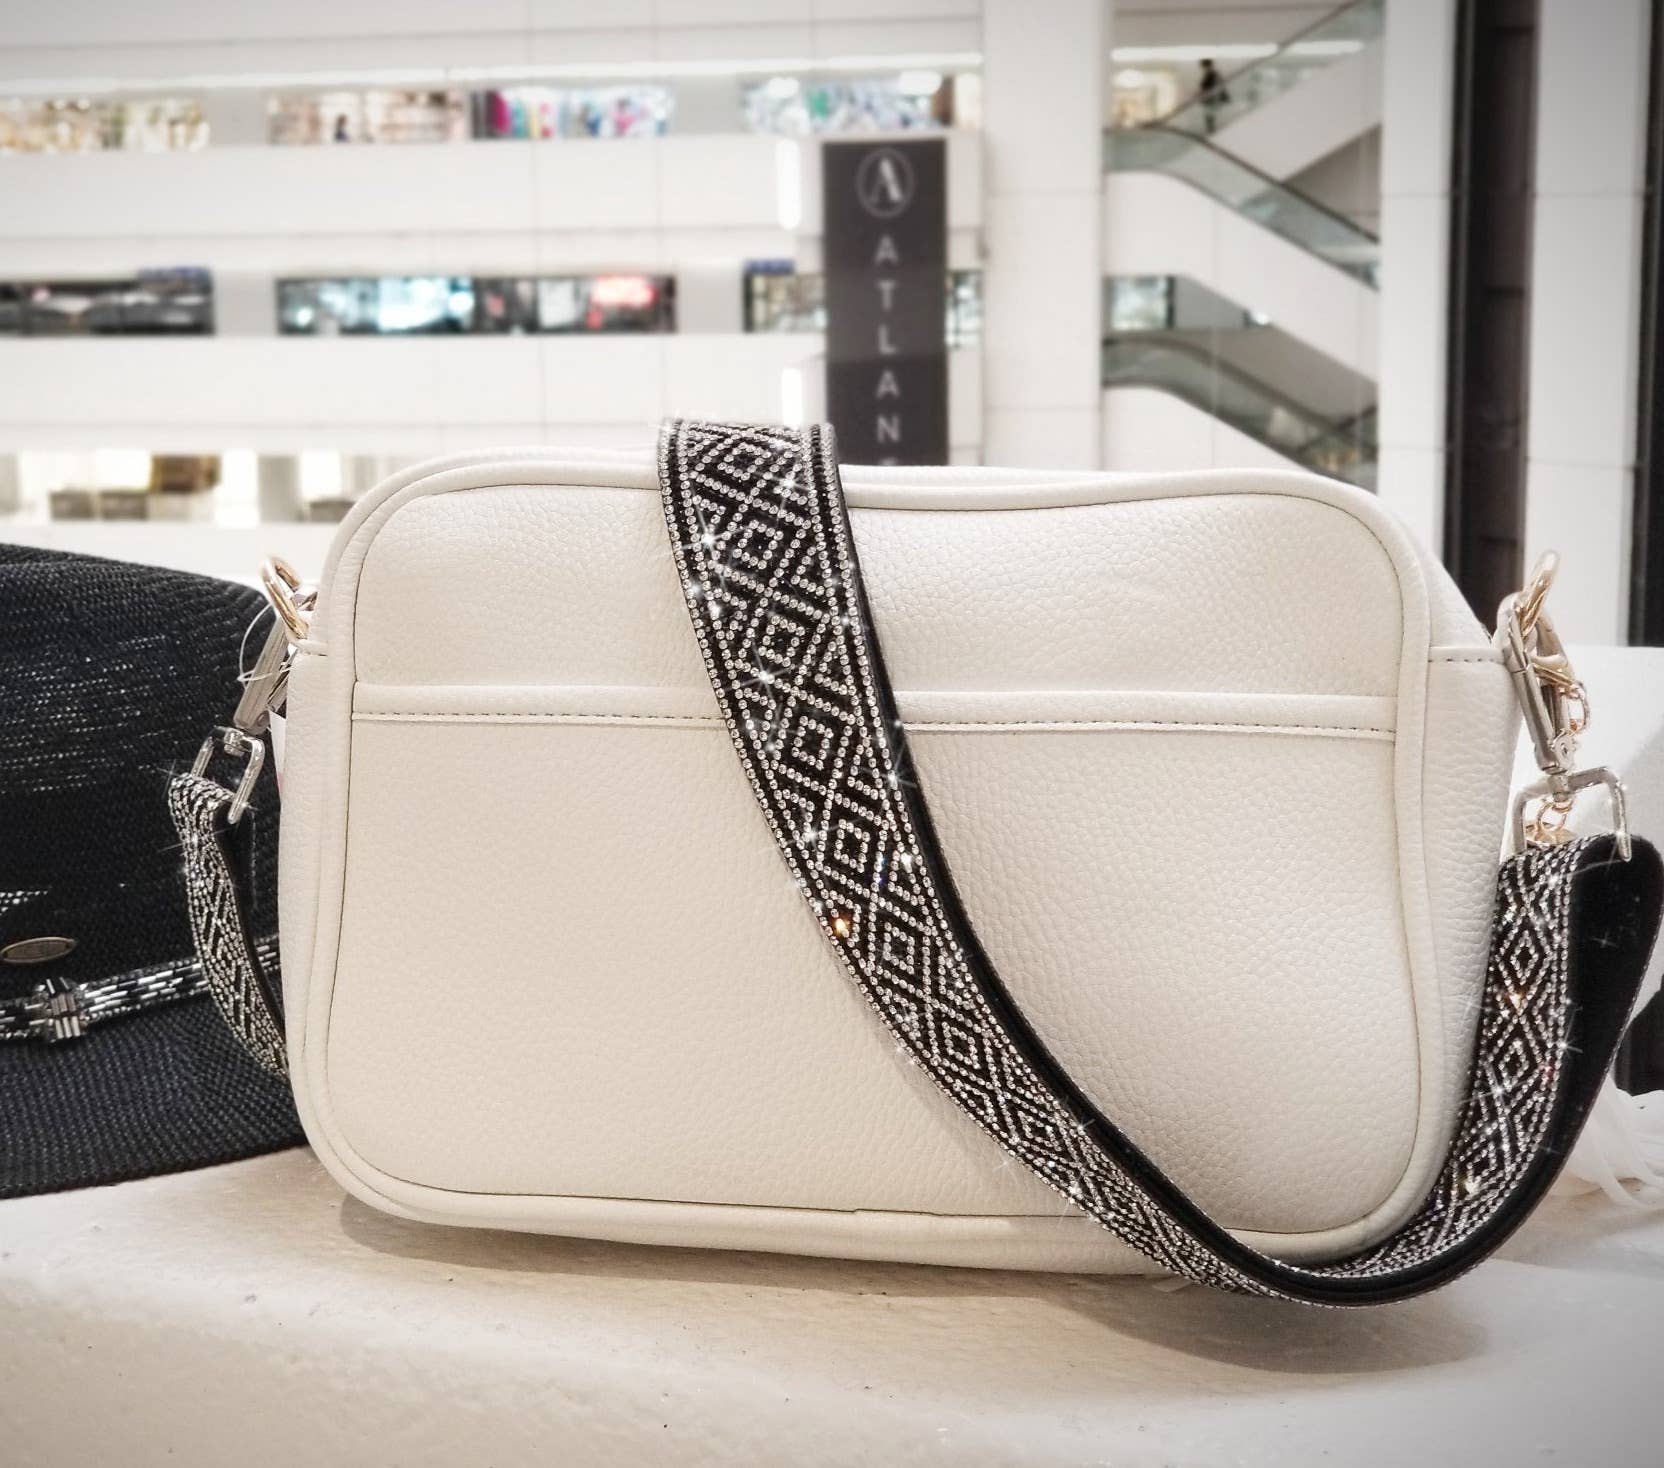 Where can I buy wholesale handbags? - Quora